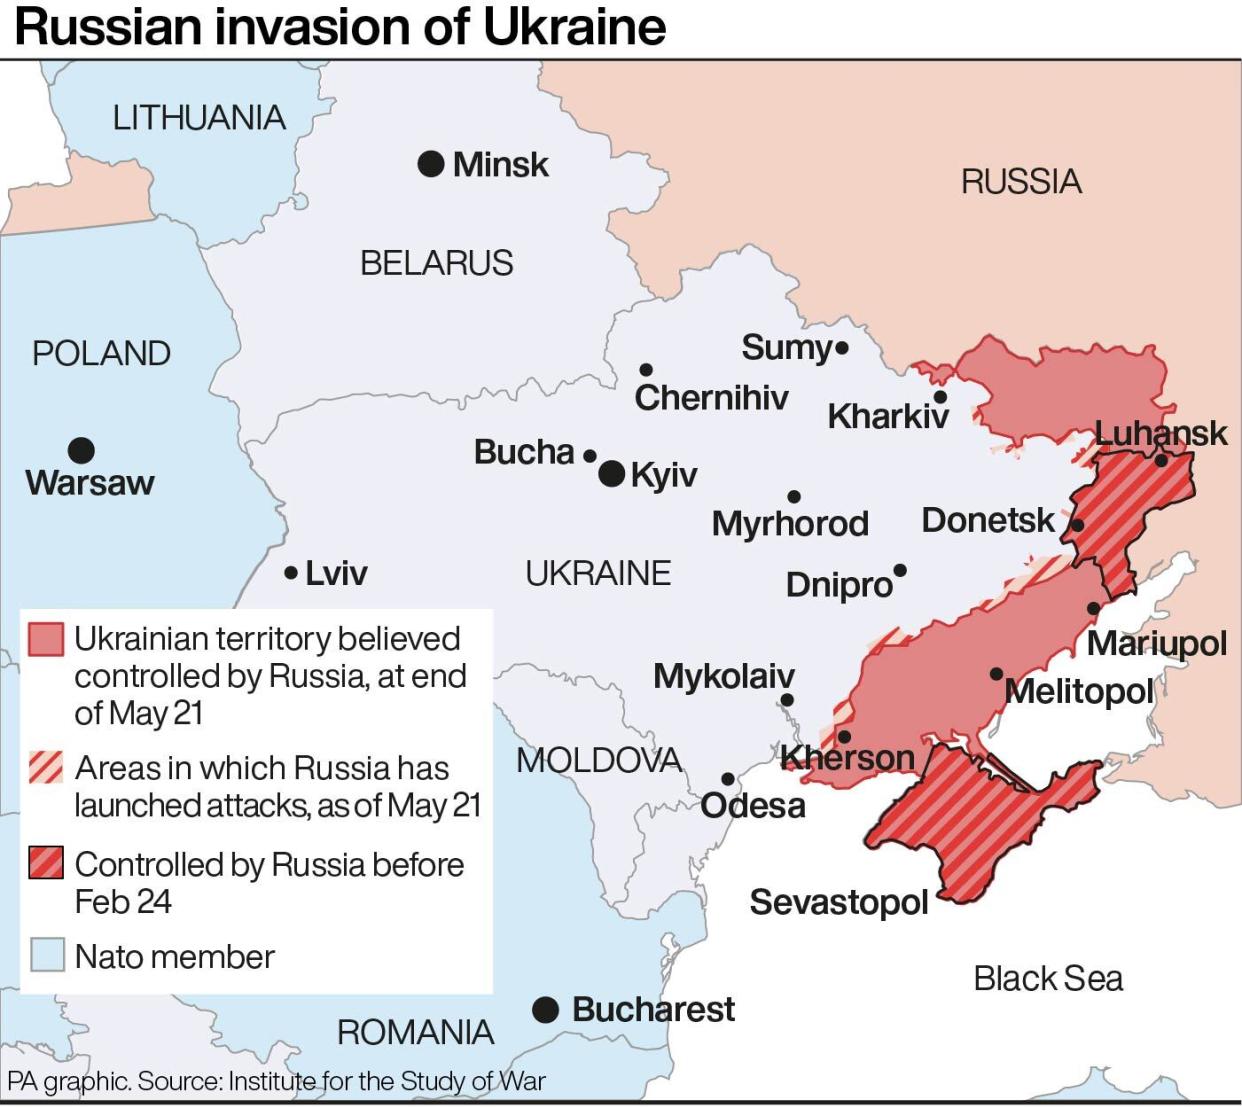 Russian invasion of Ukraine. (PA)